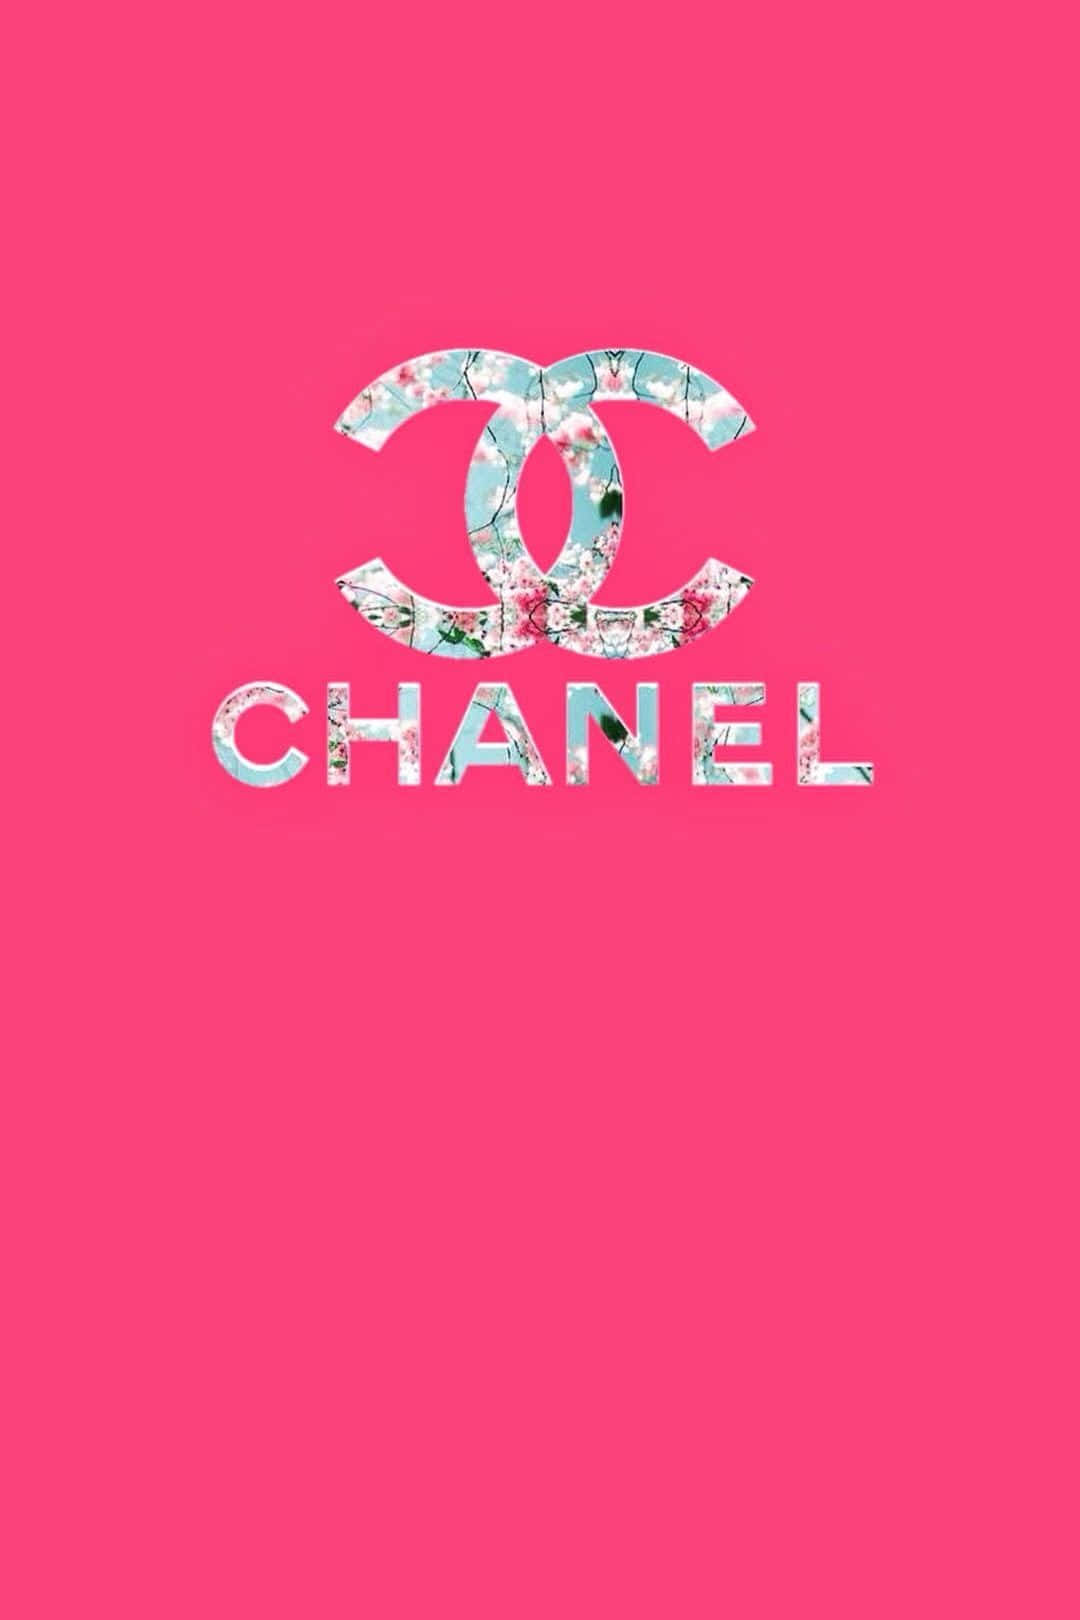 Chanellogo På En Pink Baggrund